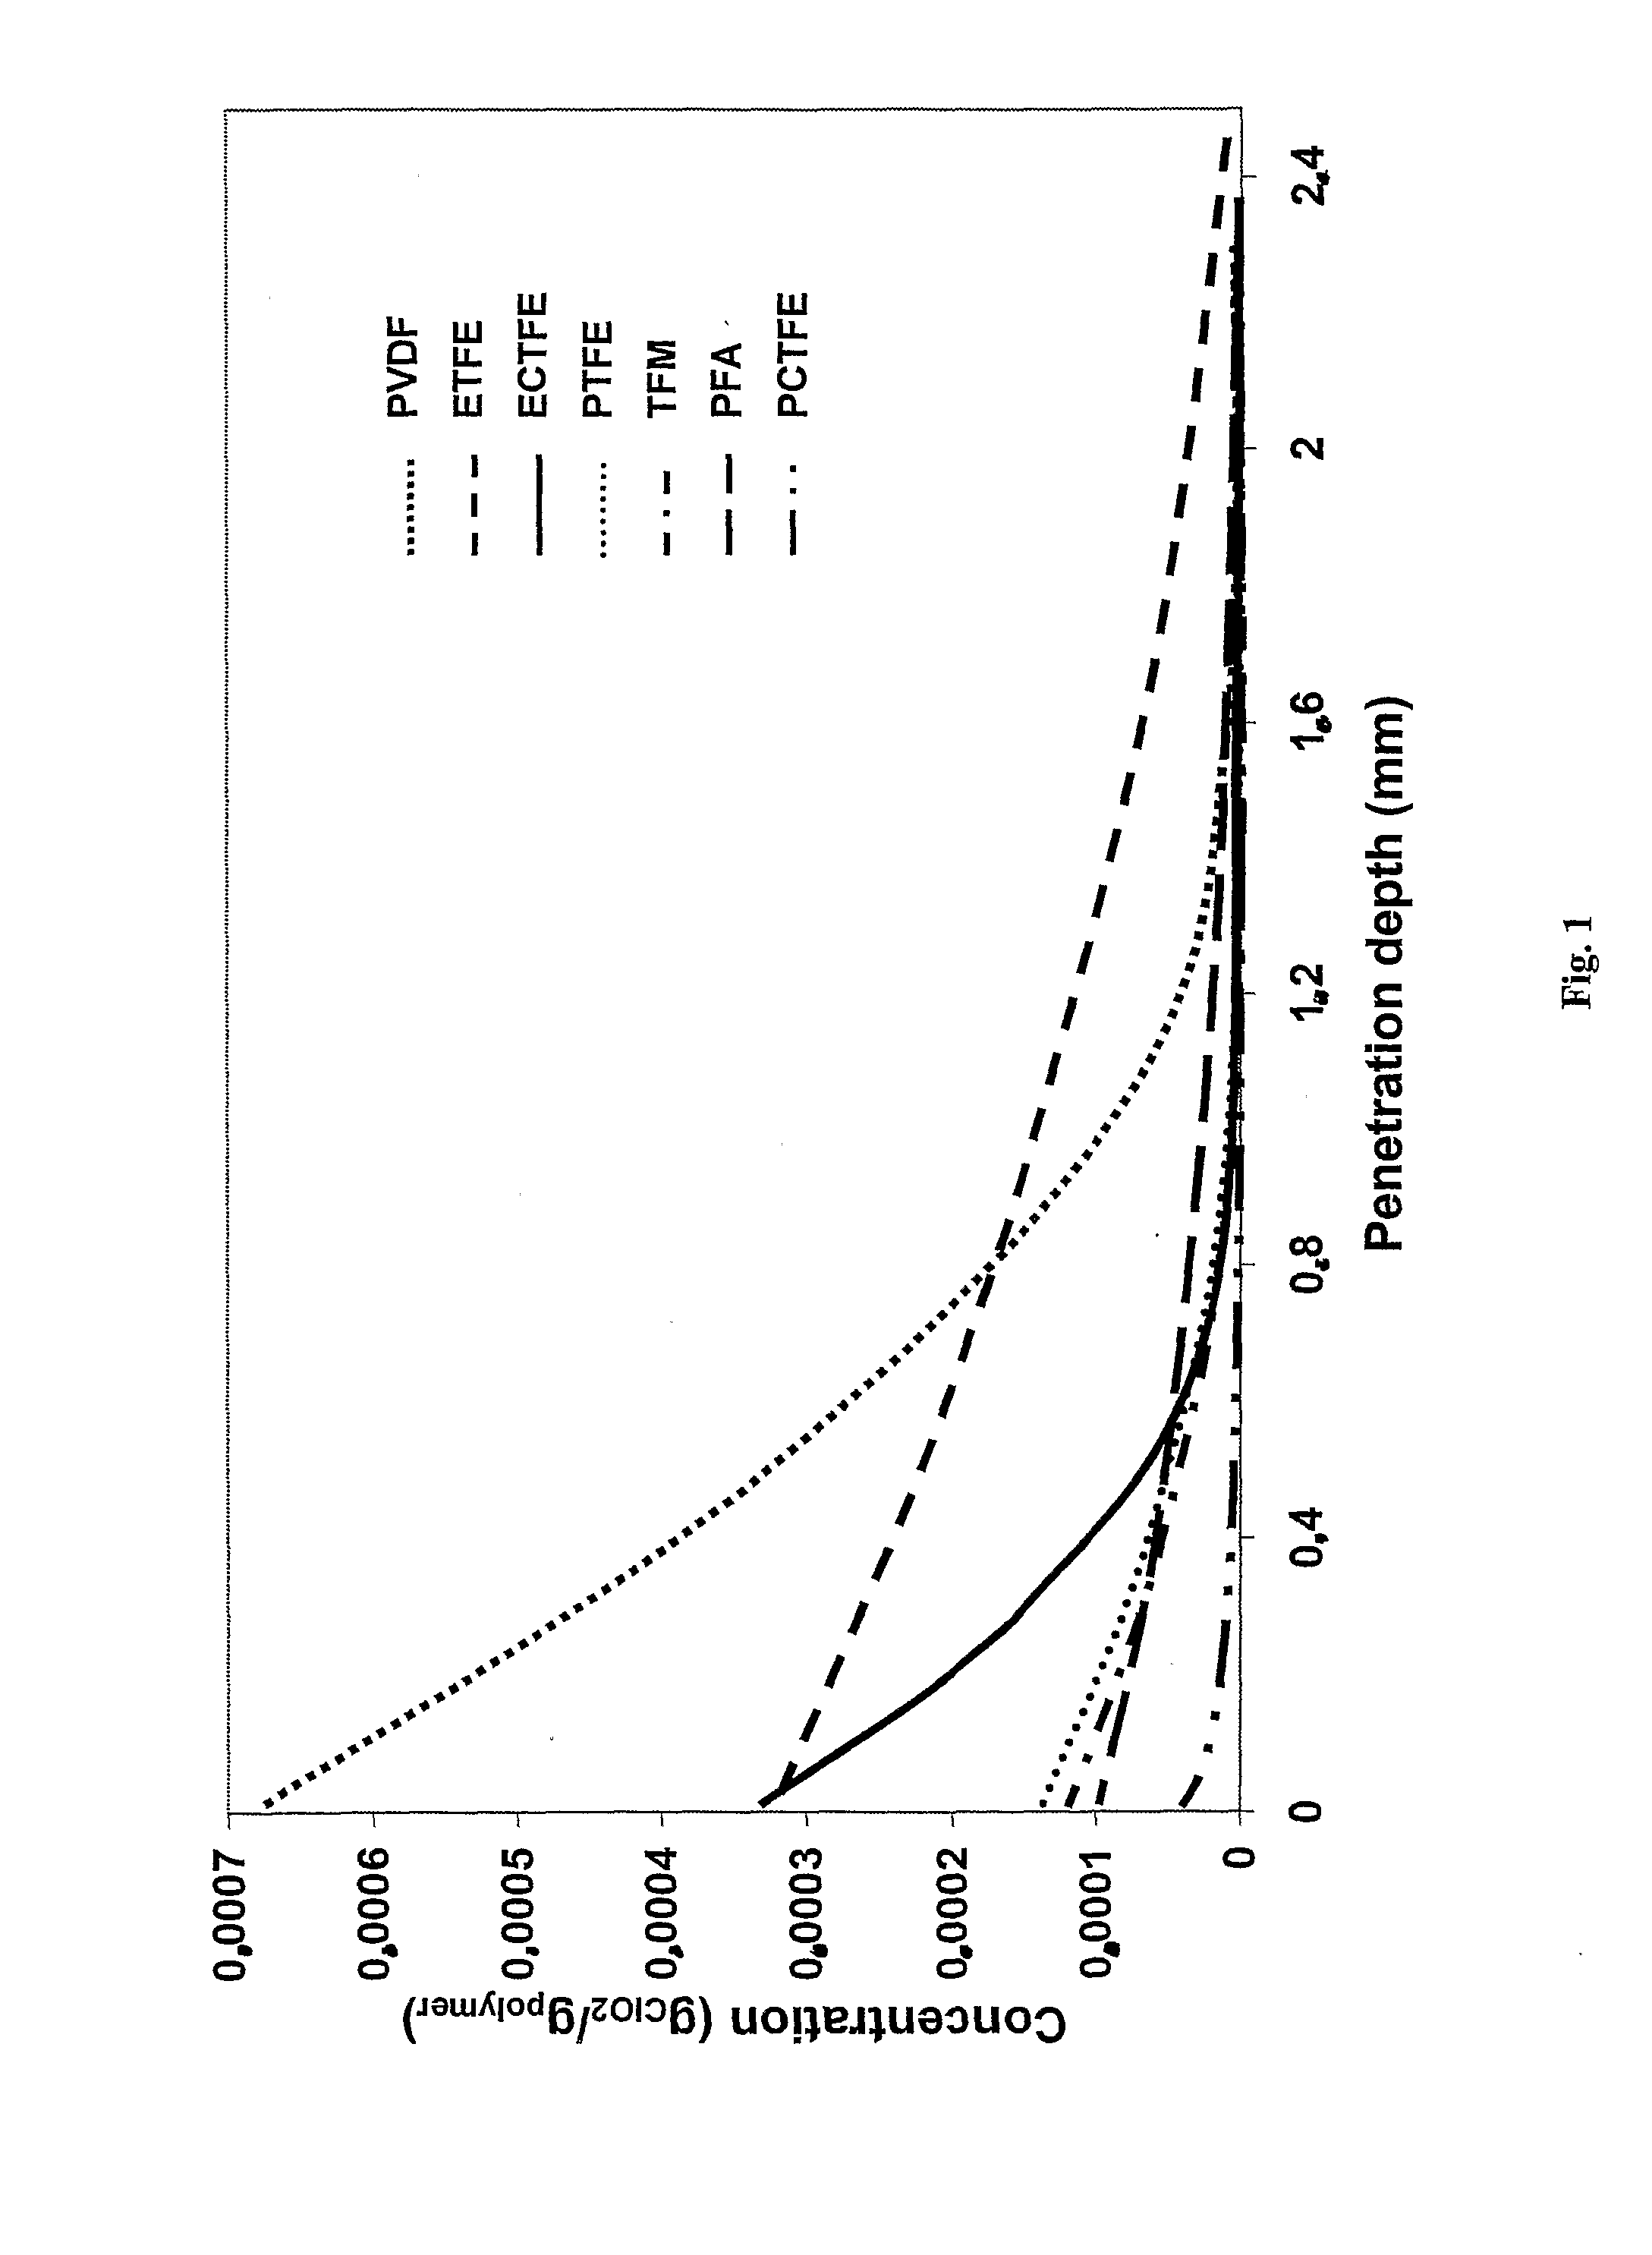 Diffusion retardation in fluoroplastics